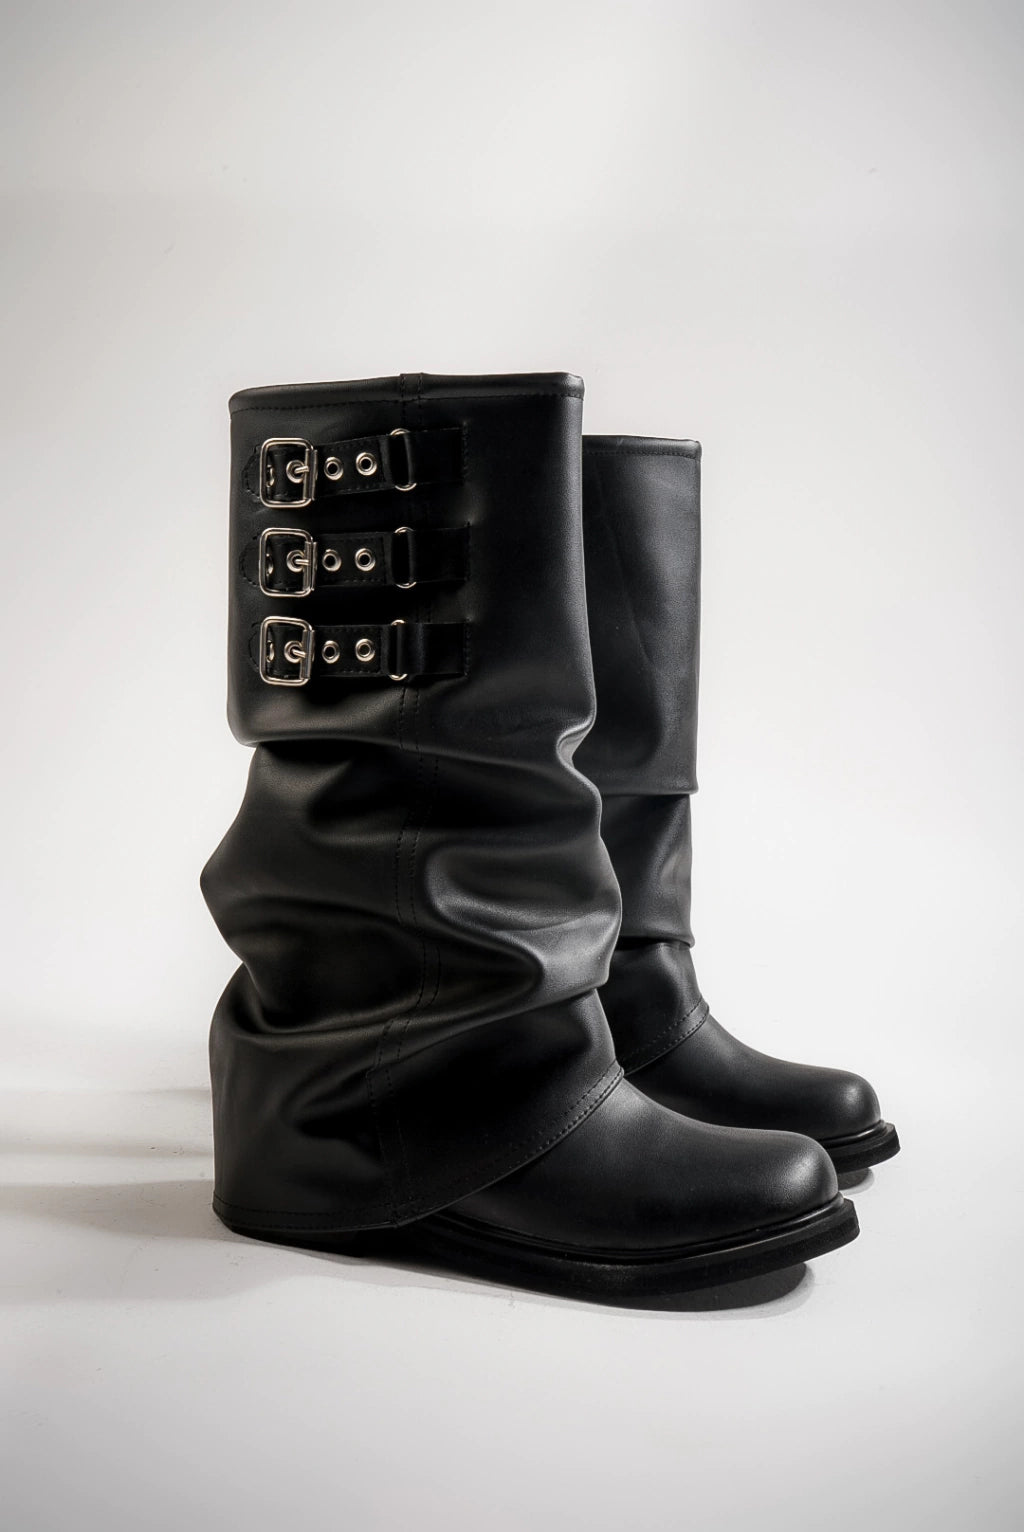 Nake boots